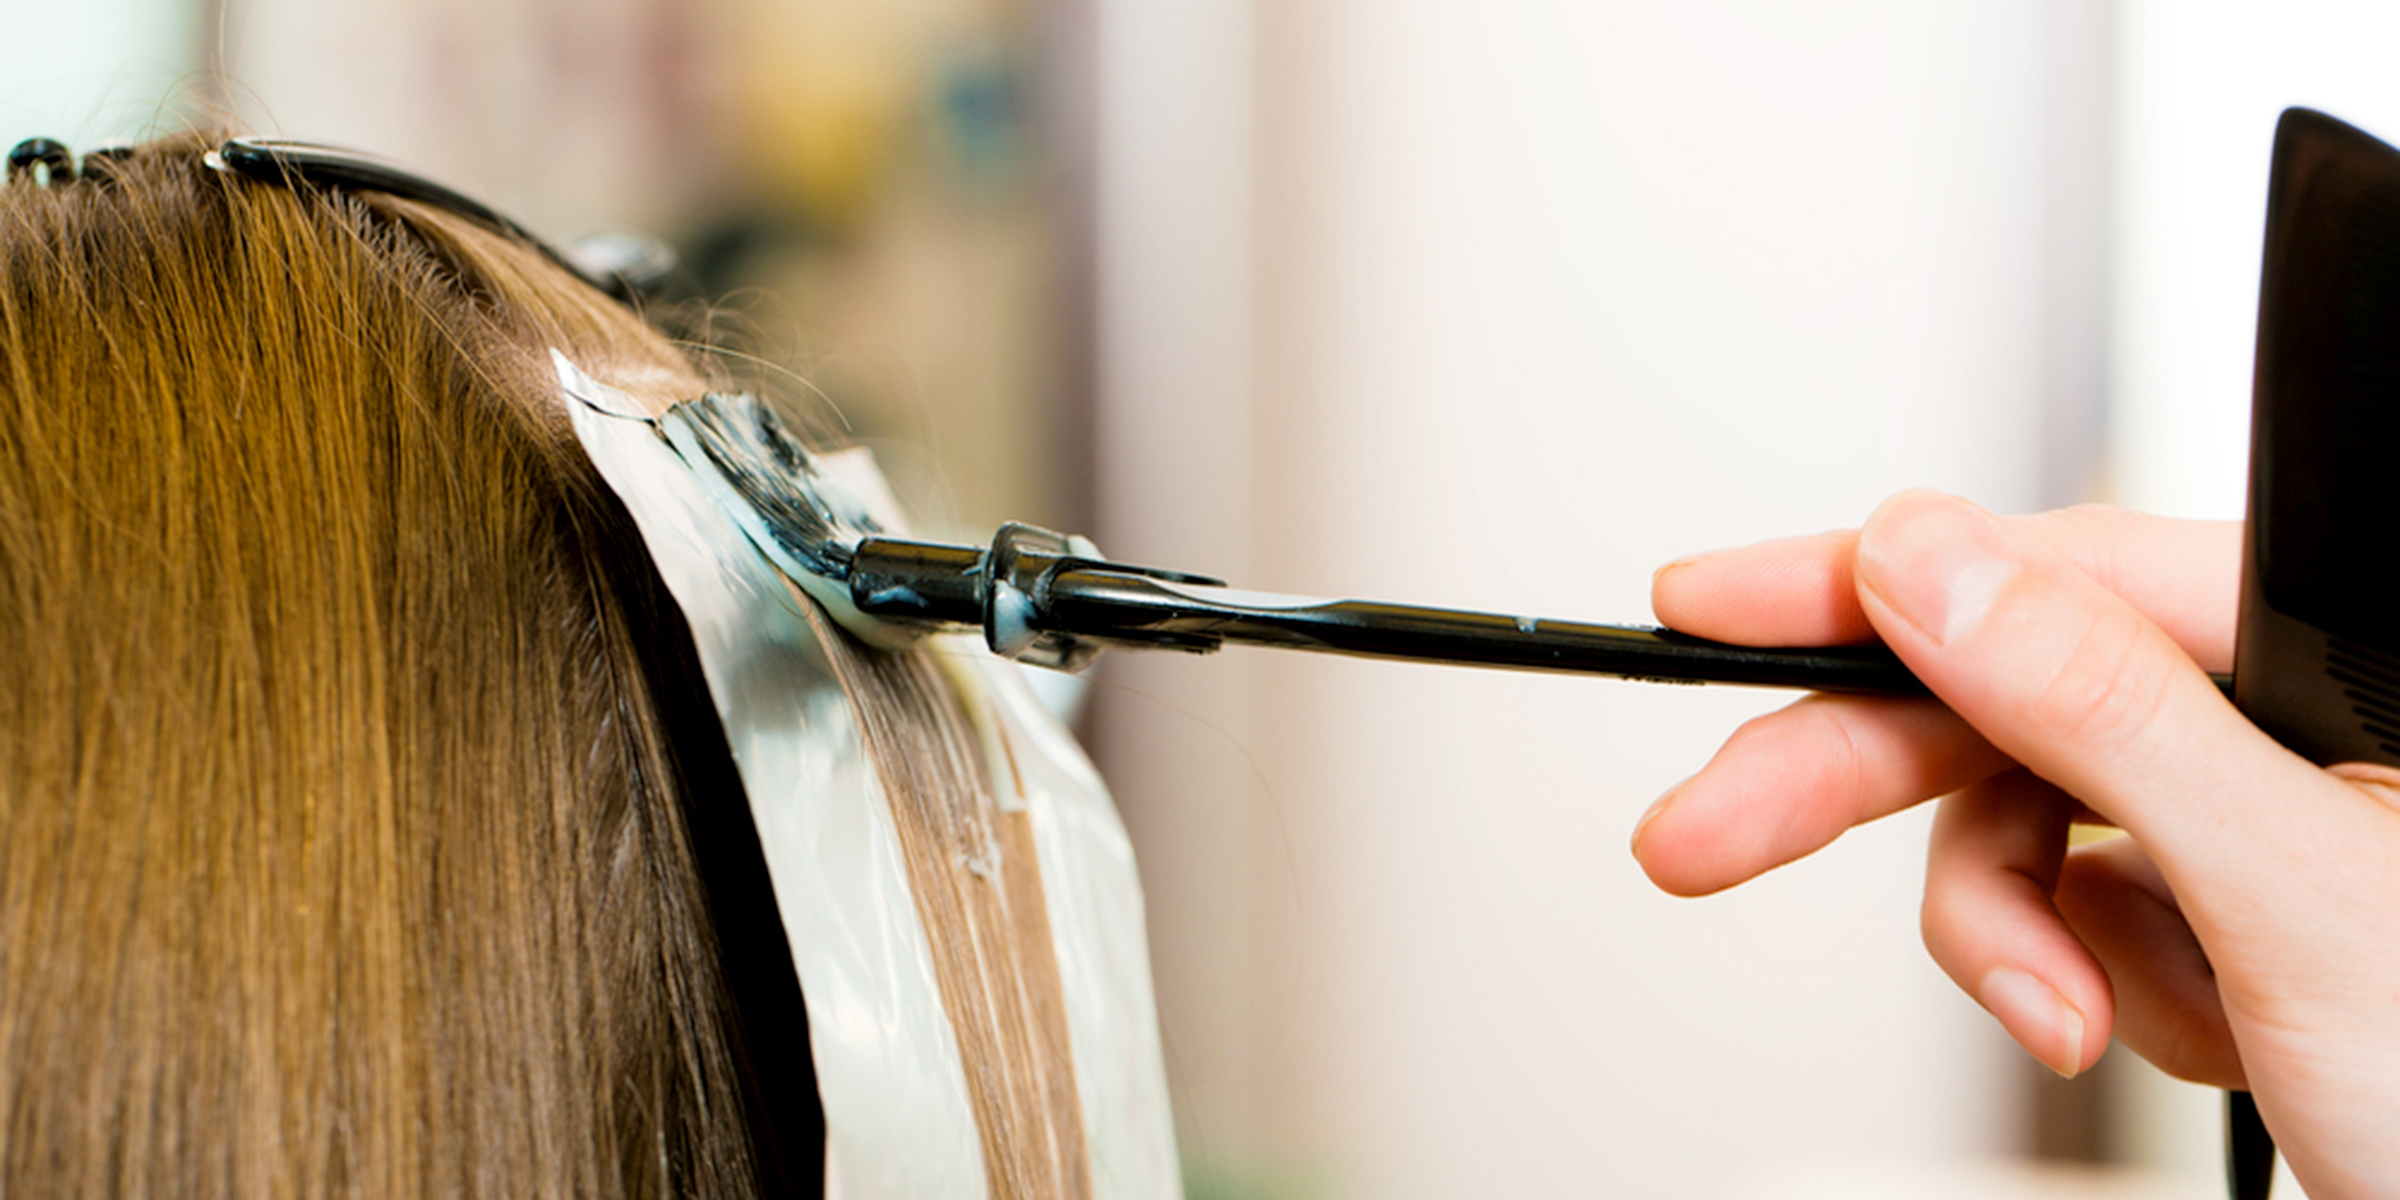 The Longevity List: Making Your Hair Color Last Longer